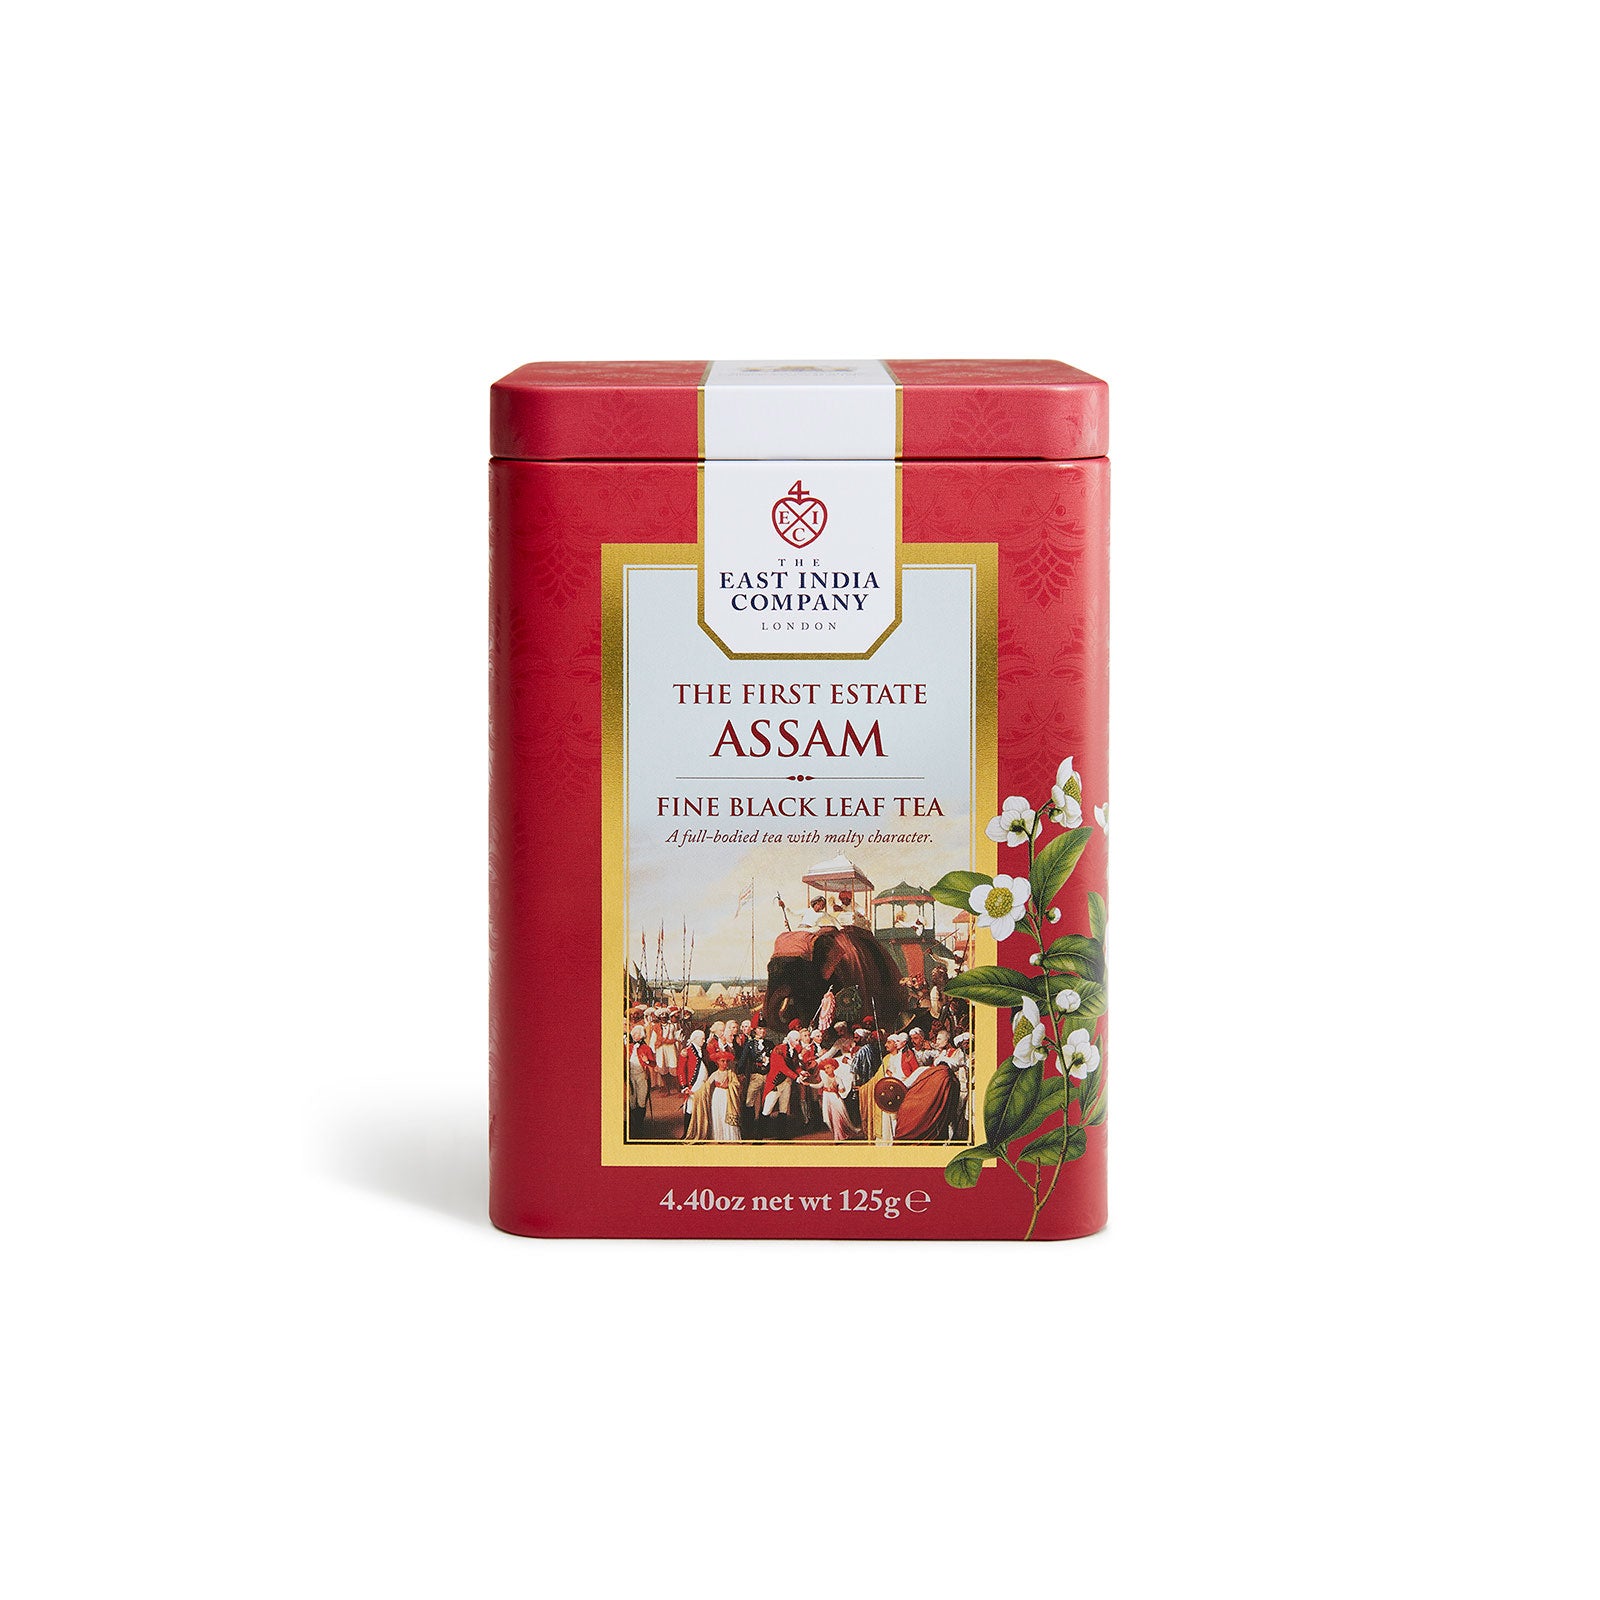 The First Estate Assam Loose Leaf Black Tea Caddy